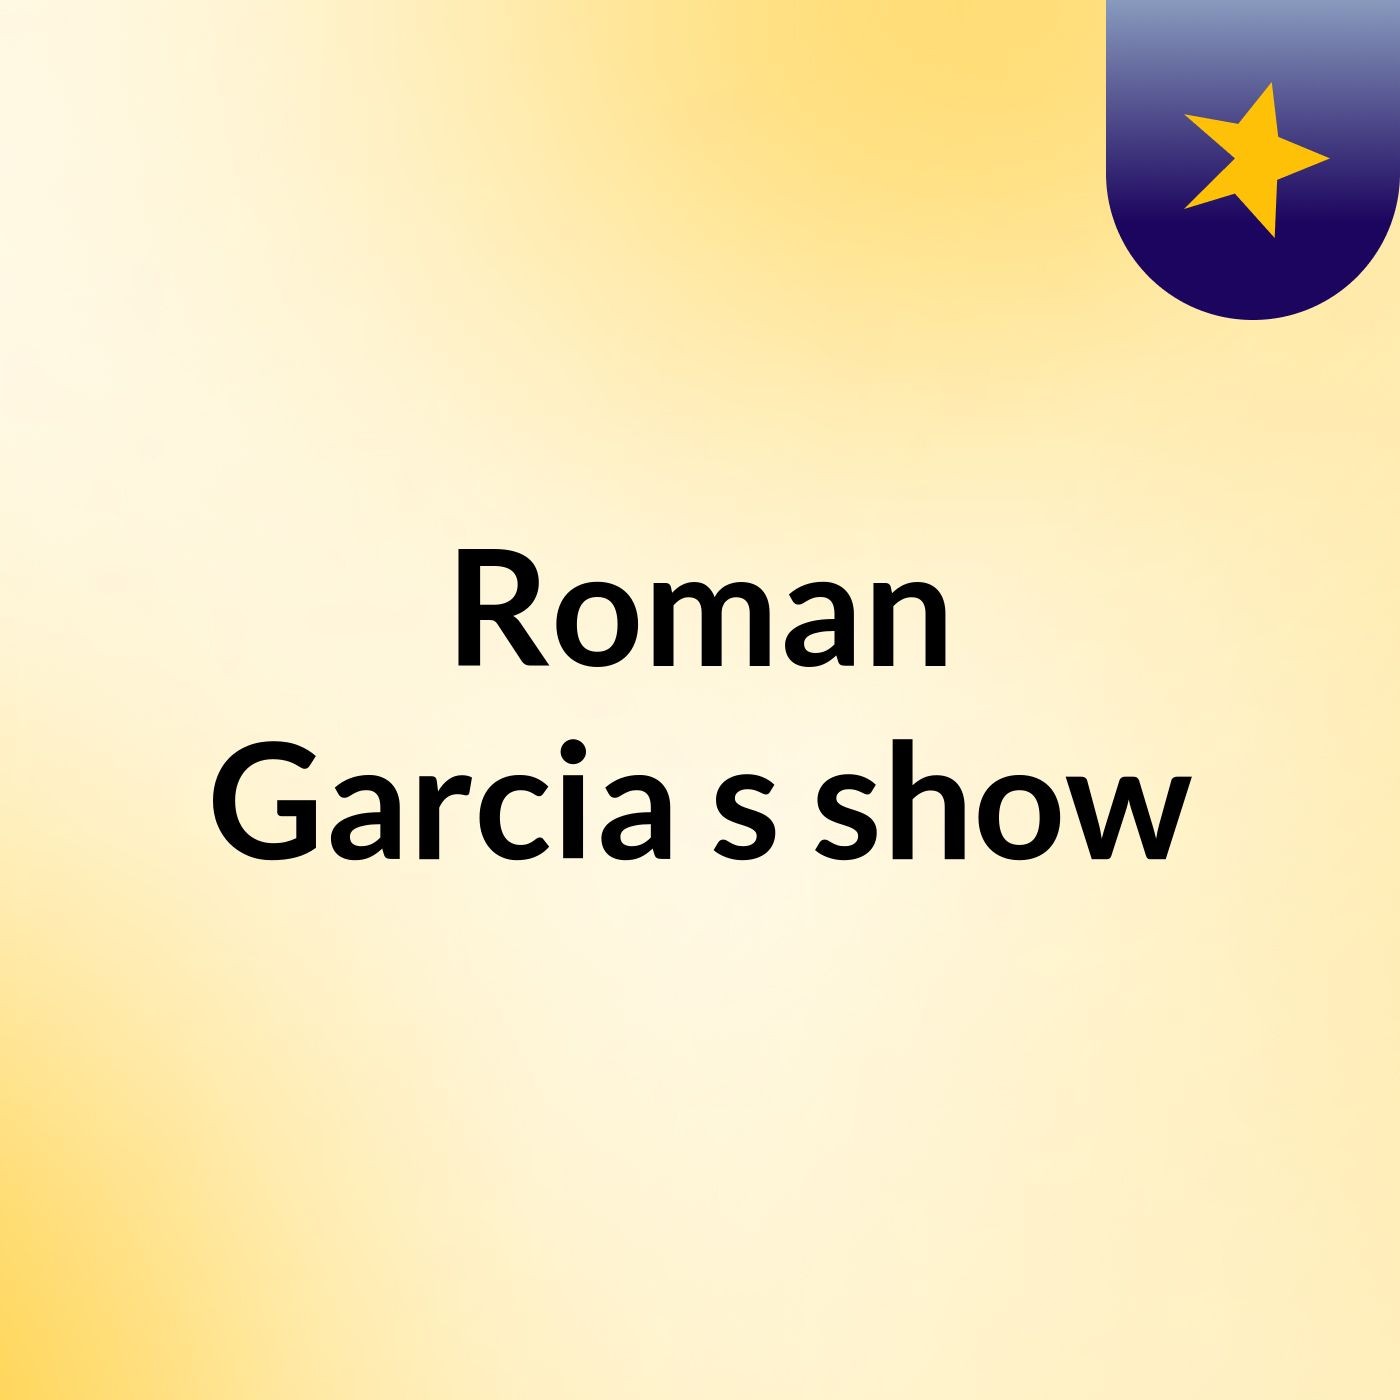 Roman Garcia's show